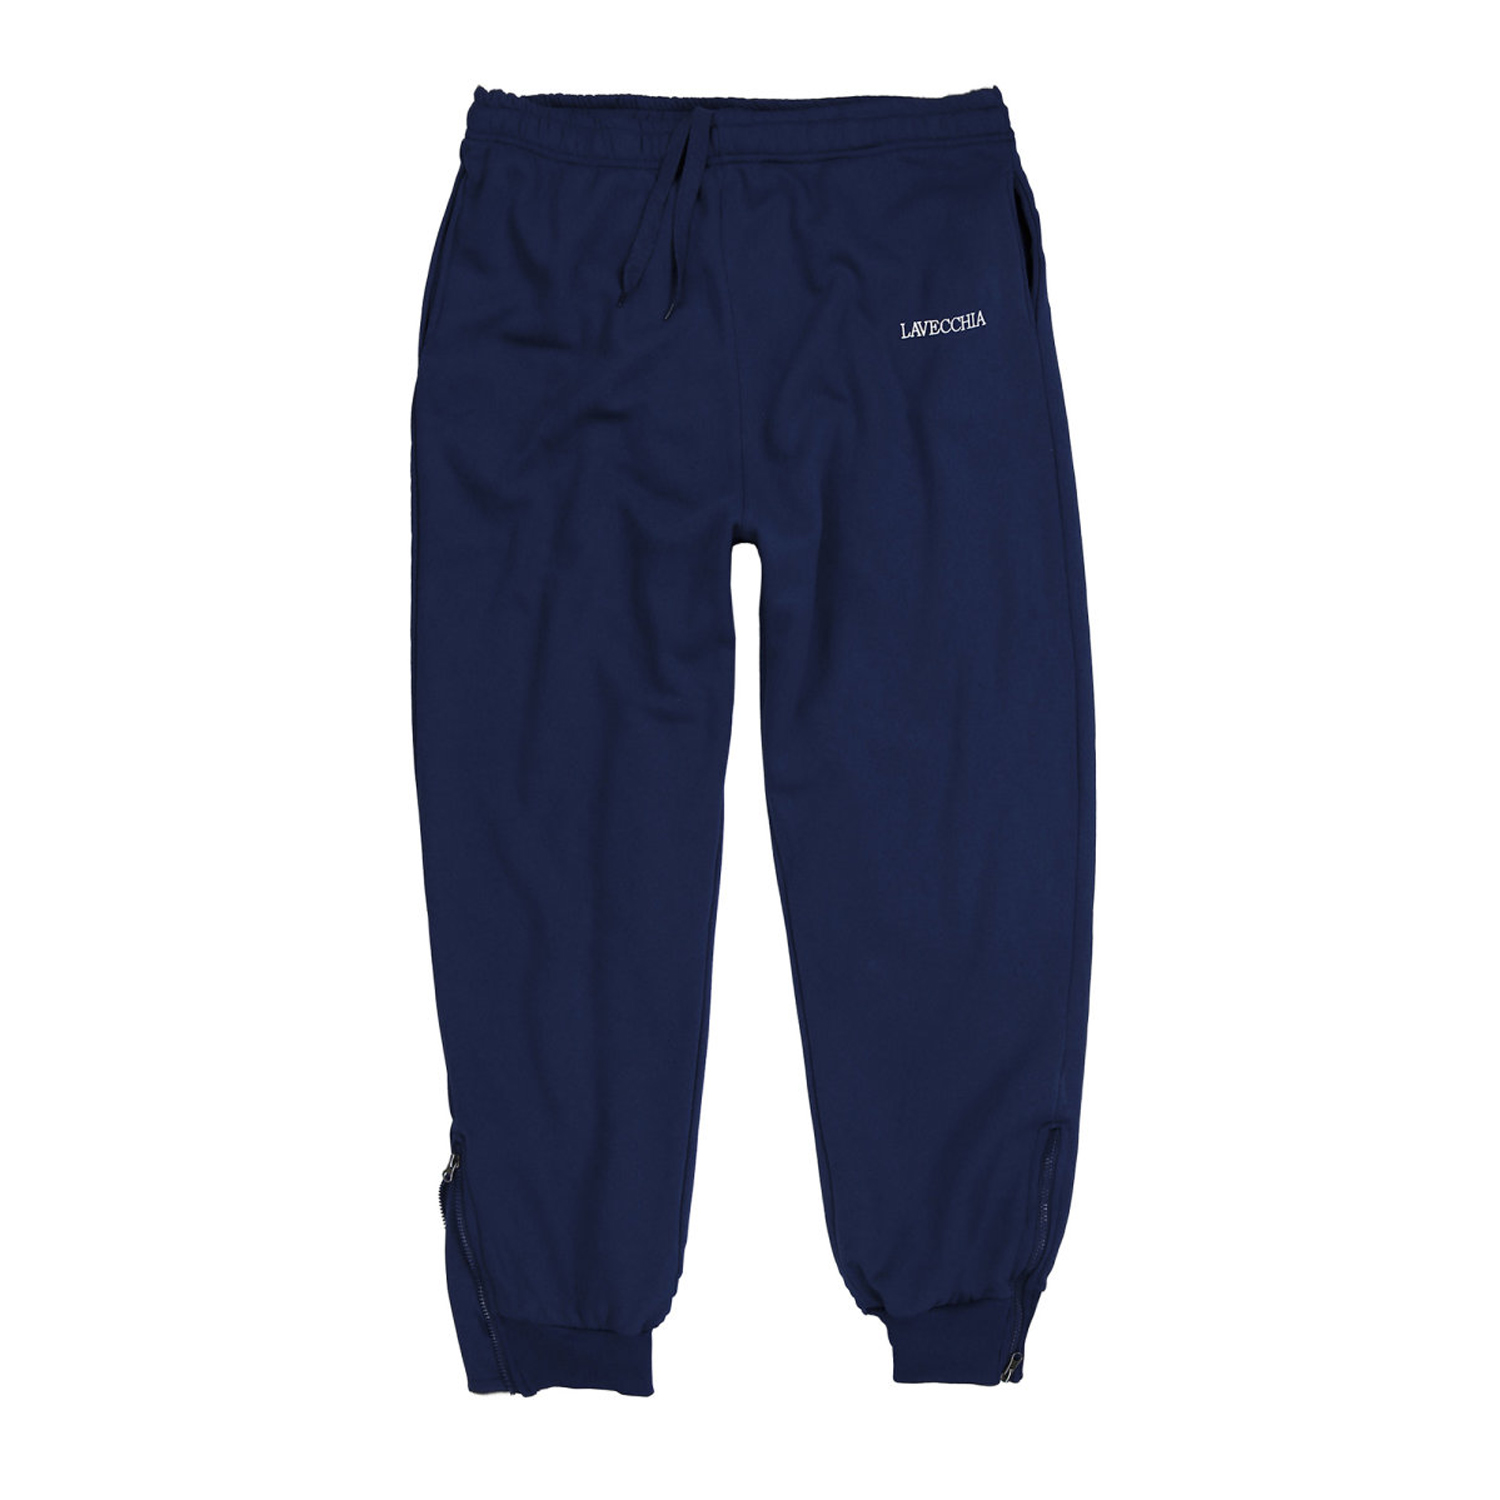 Sweatpants dark blue in plus size by Lavecchia